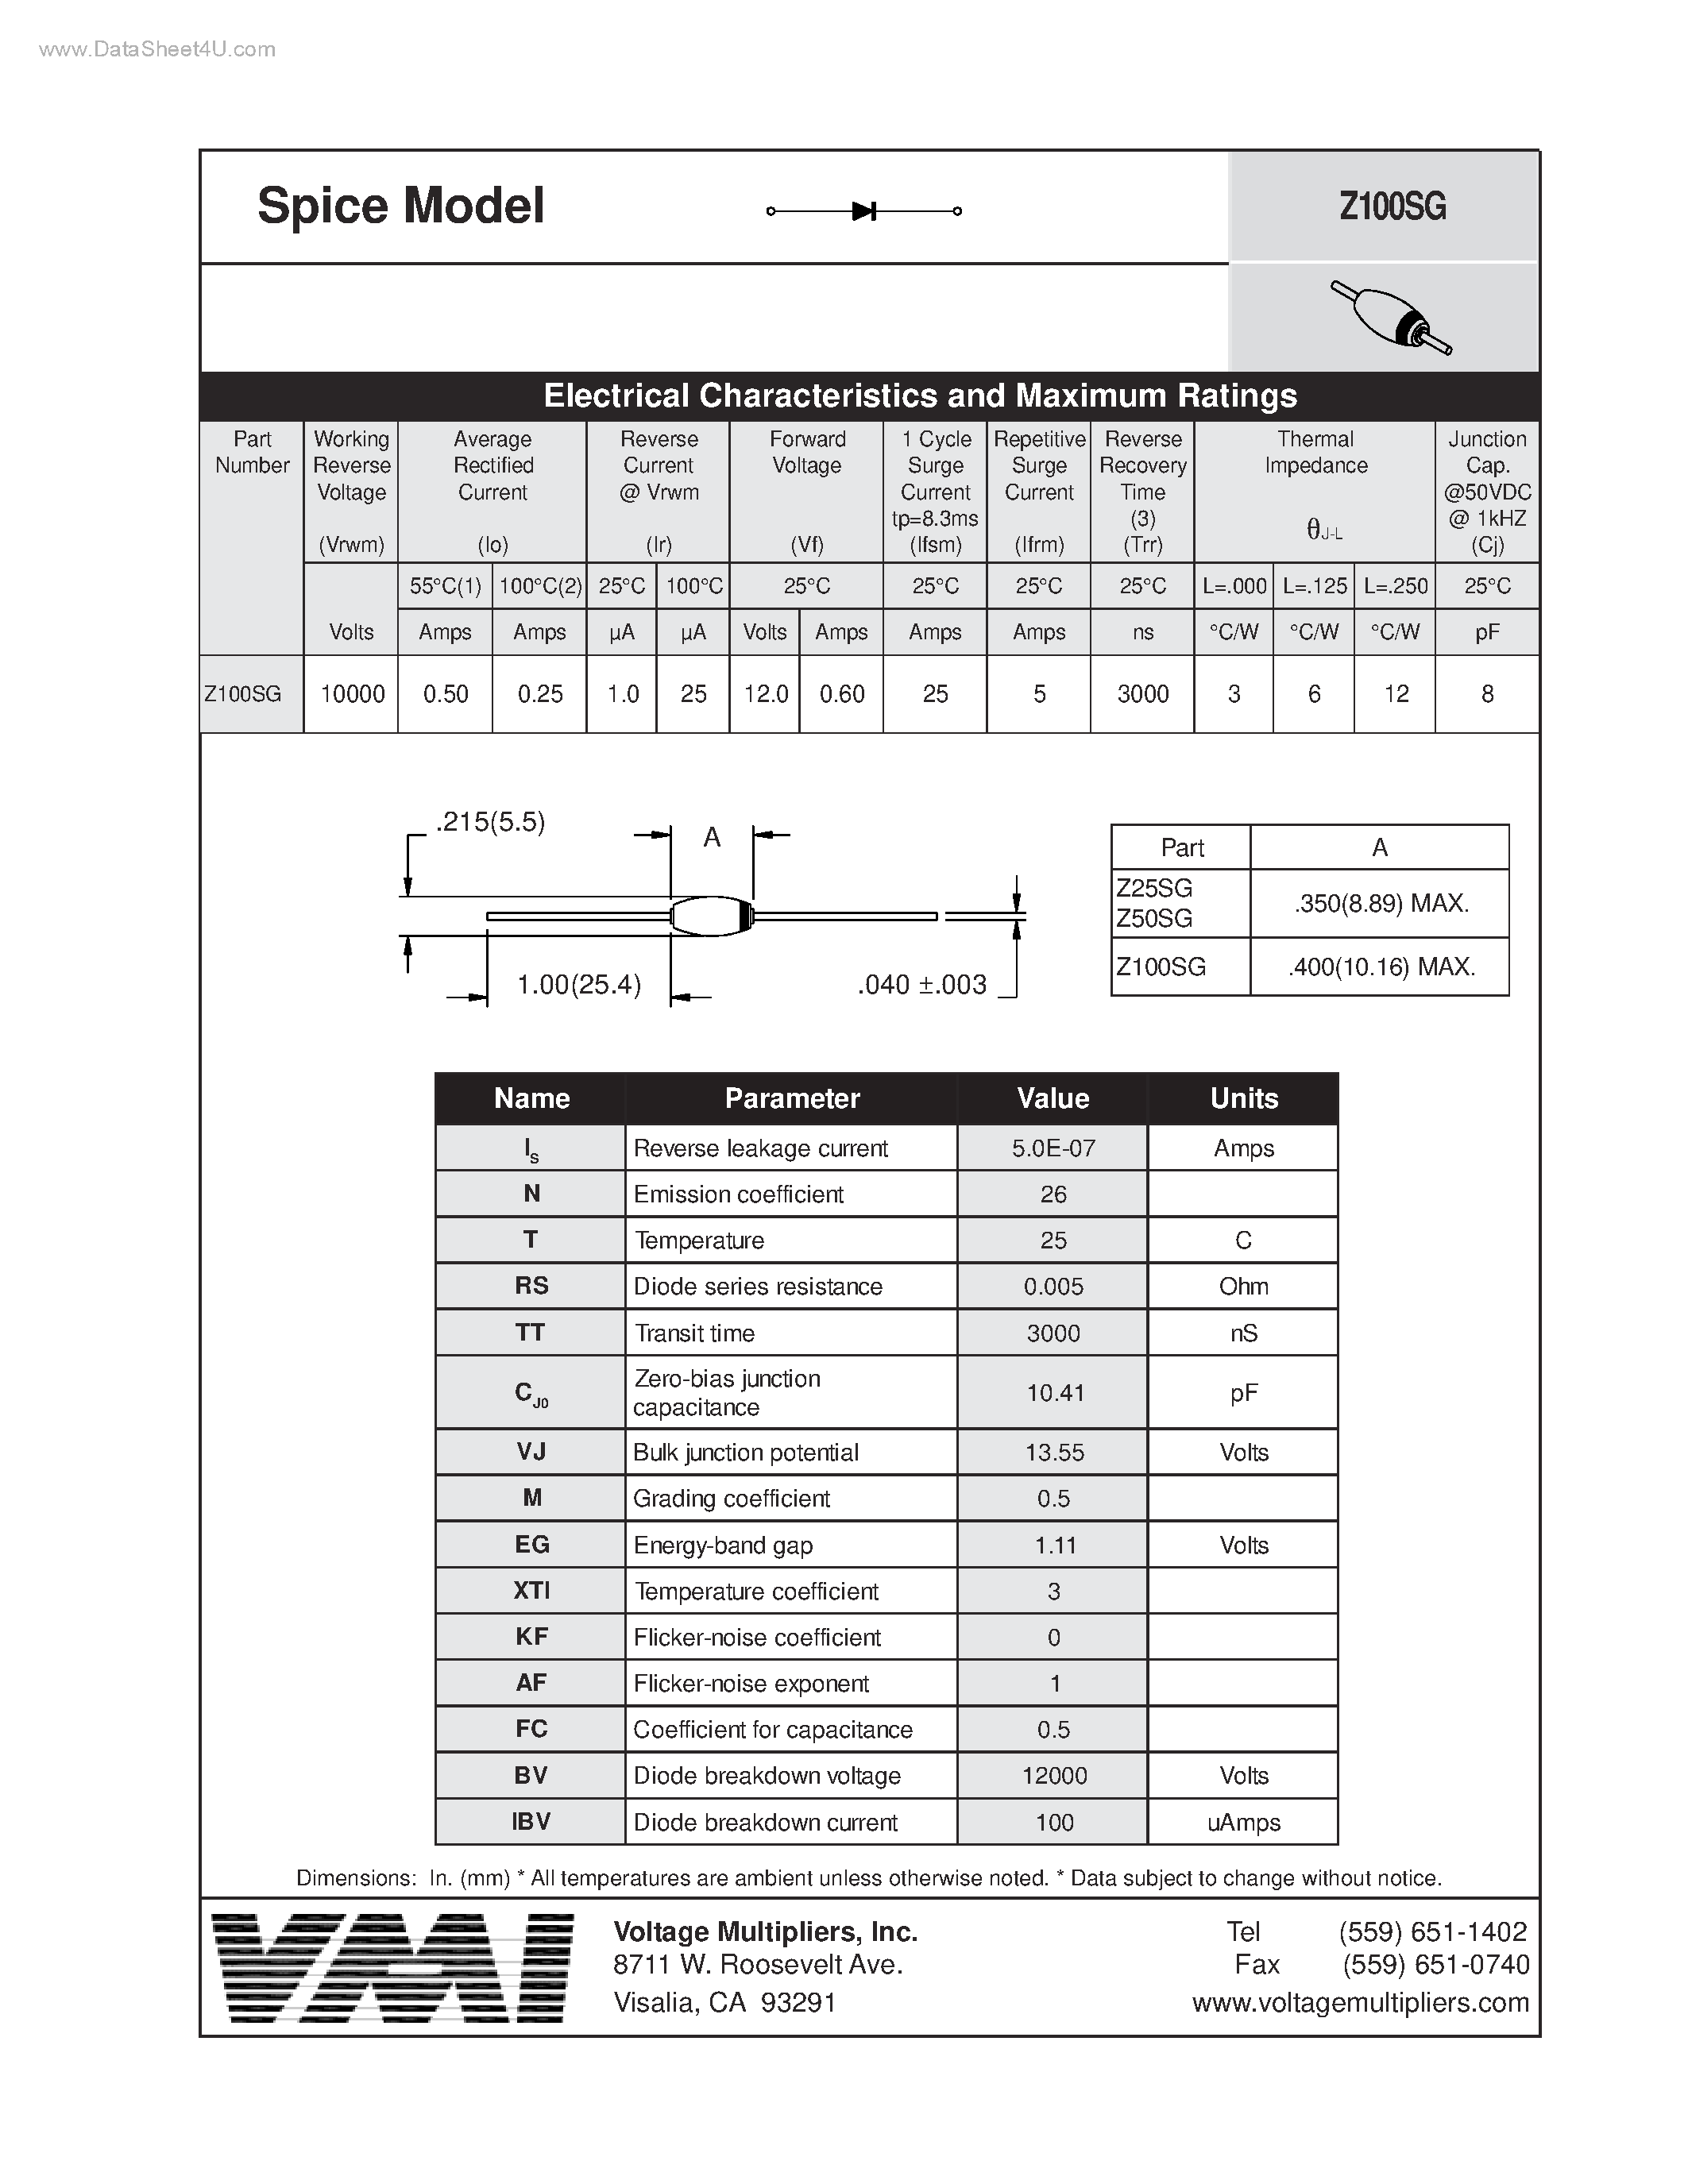 Datasheet Z100SG - Spice Model page 1